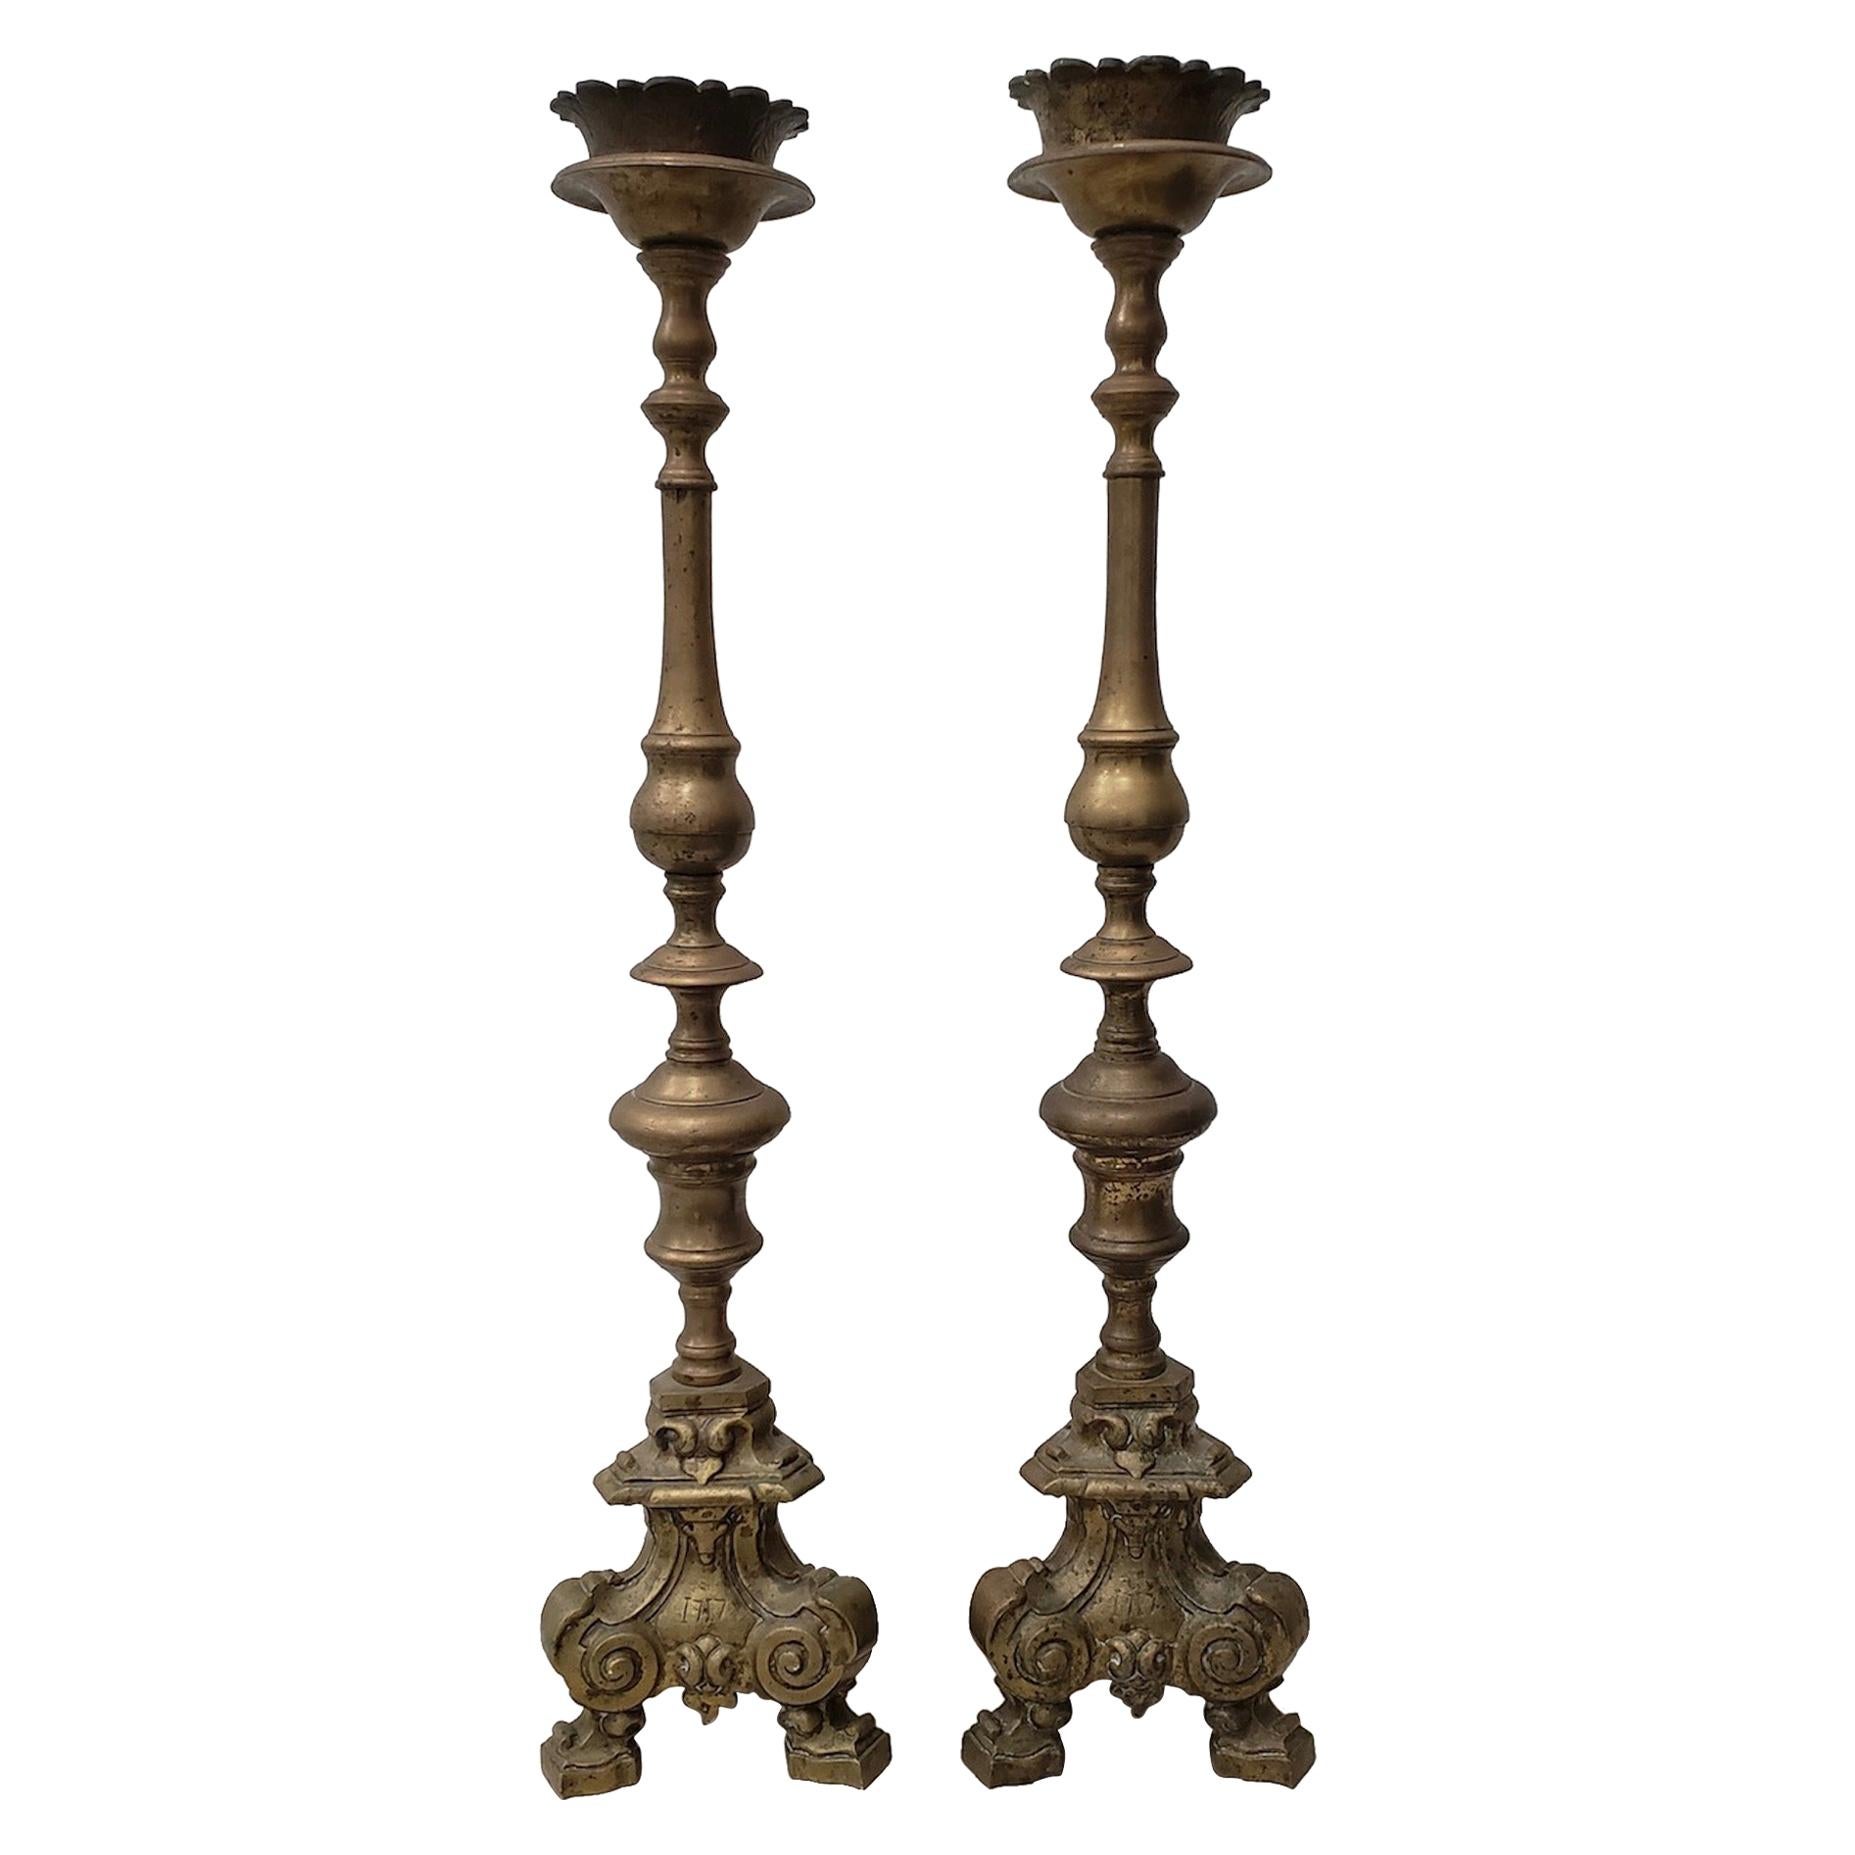 Paar Messing-Altar-/Kaminsims-Kerzenhalter aus dem frühen 18. Jahrhundert, um 1717